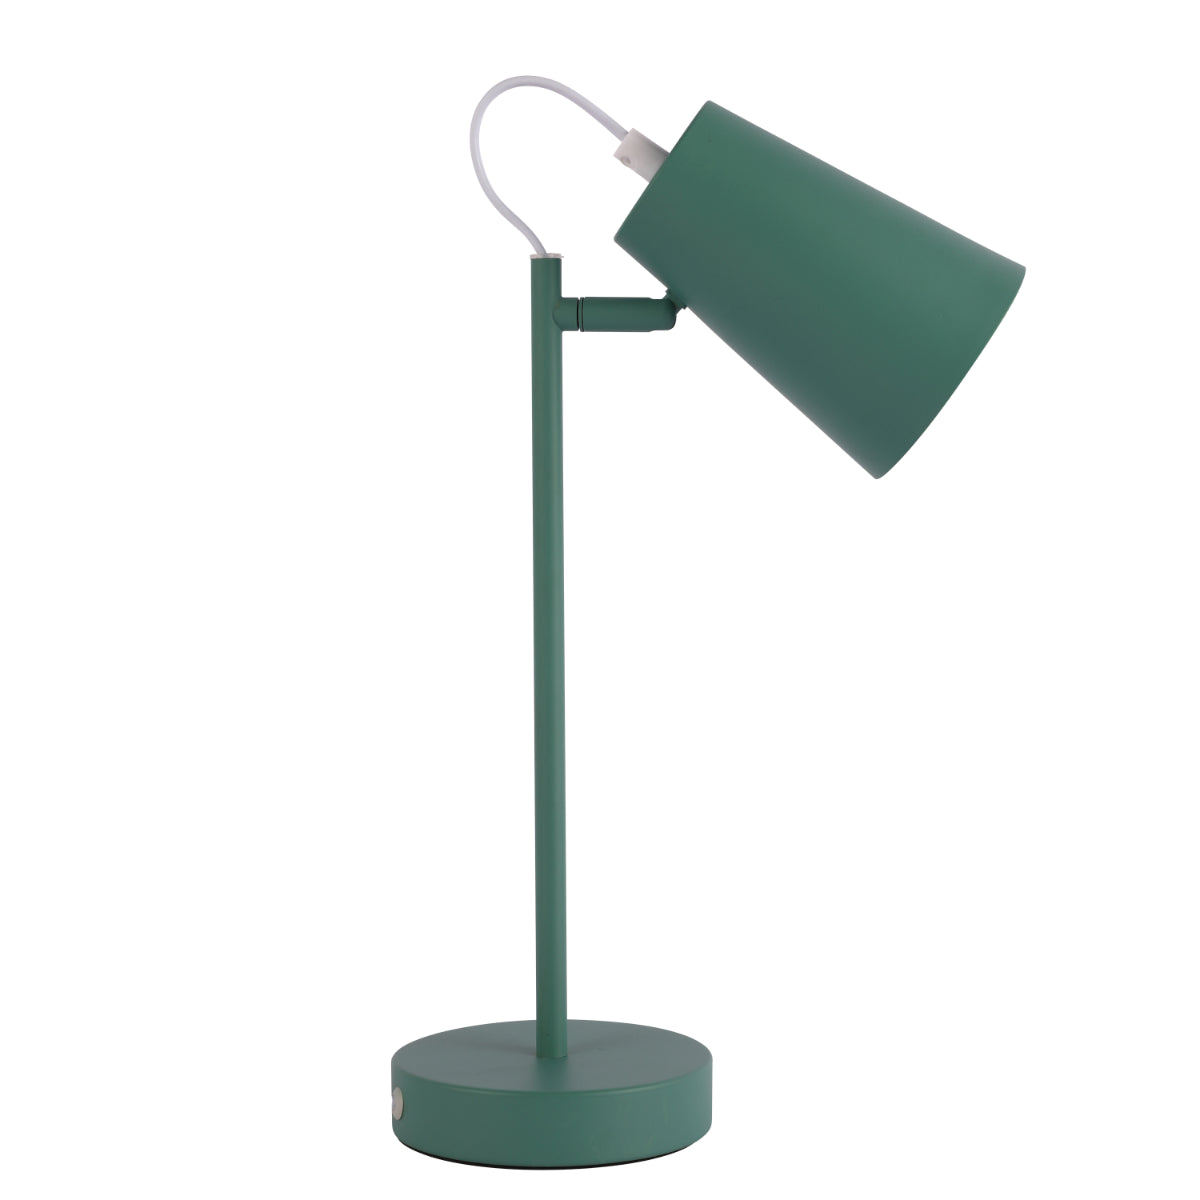 Main image of Sleek Cut Cone Desk Lamp in Vibrant Colors - Modern Elegance 130-03670